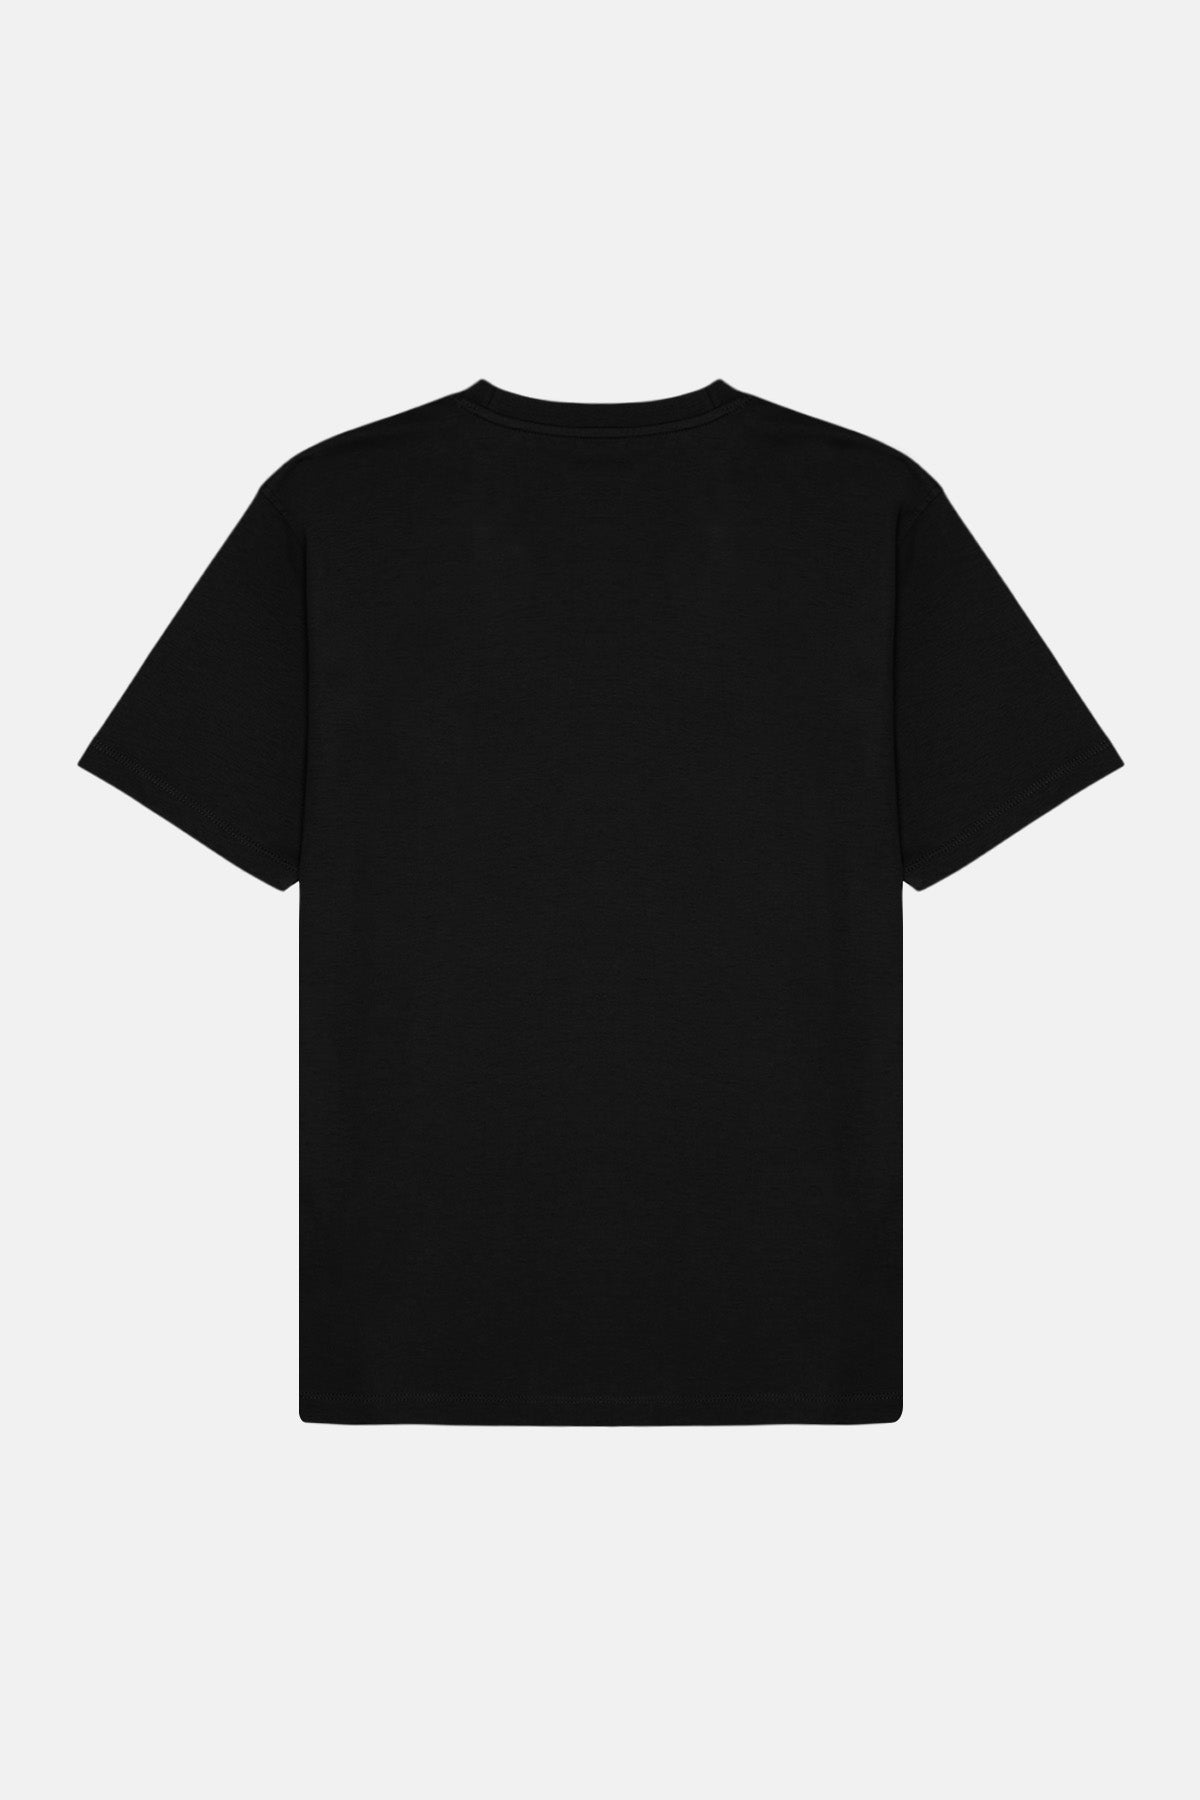 Kızıl Tilki Soft Supreme T-Shirt  - Siyah